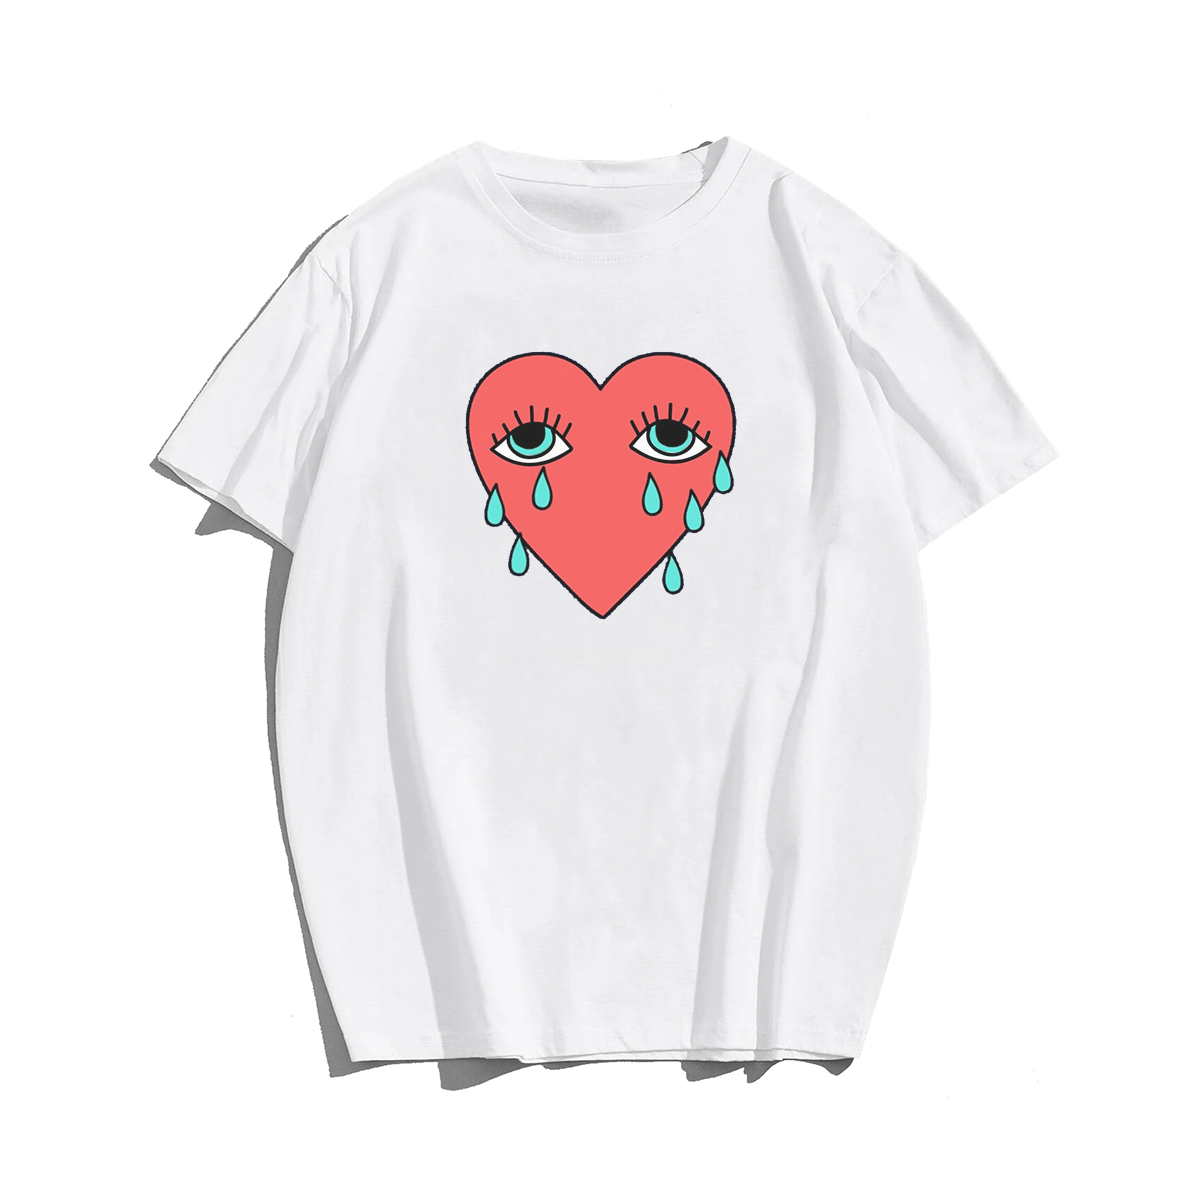 Heart Broken fashion men's plus size T-shirt 100% cotton